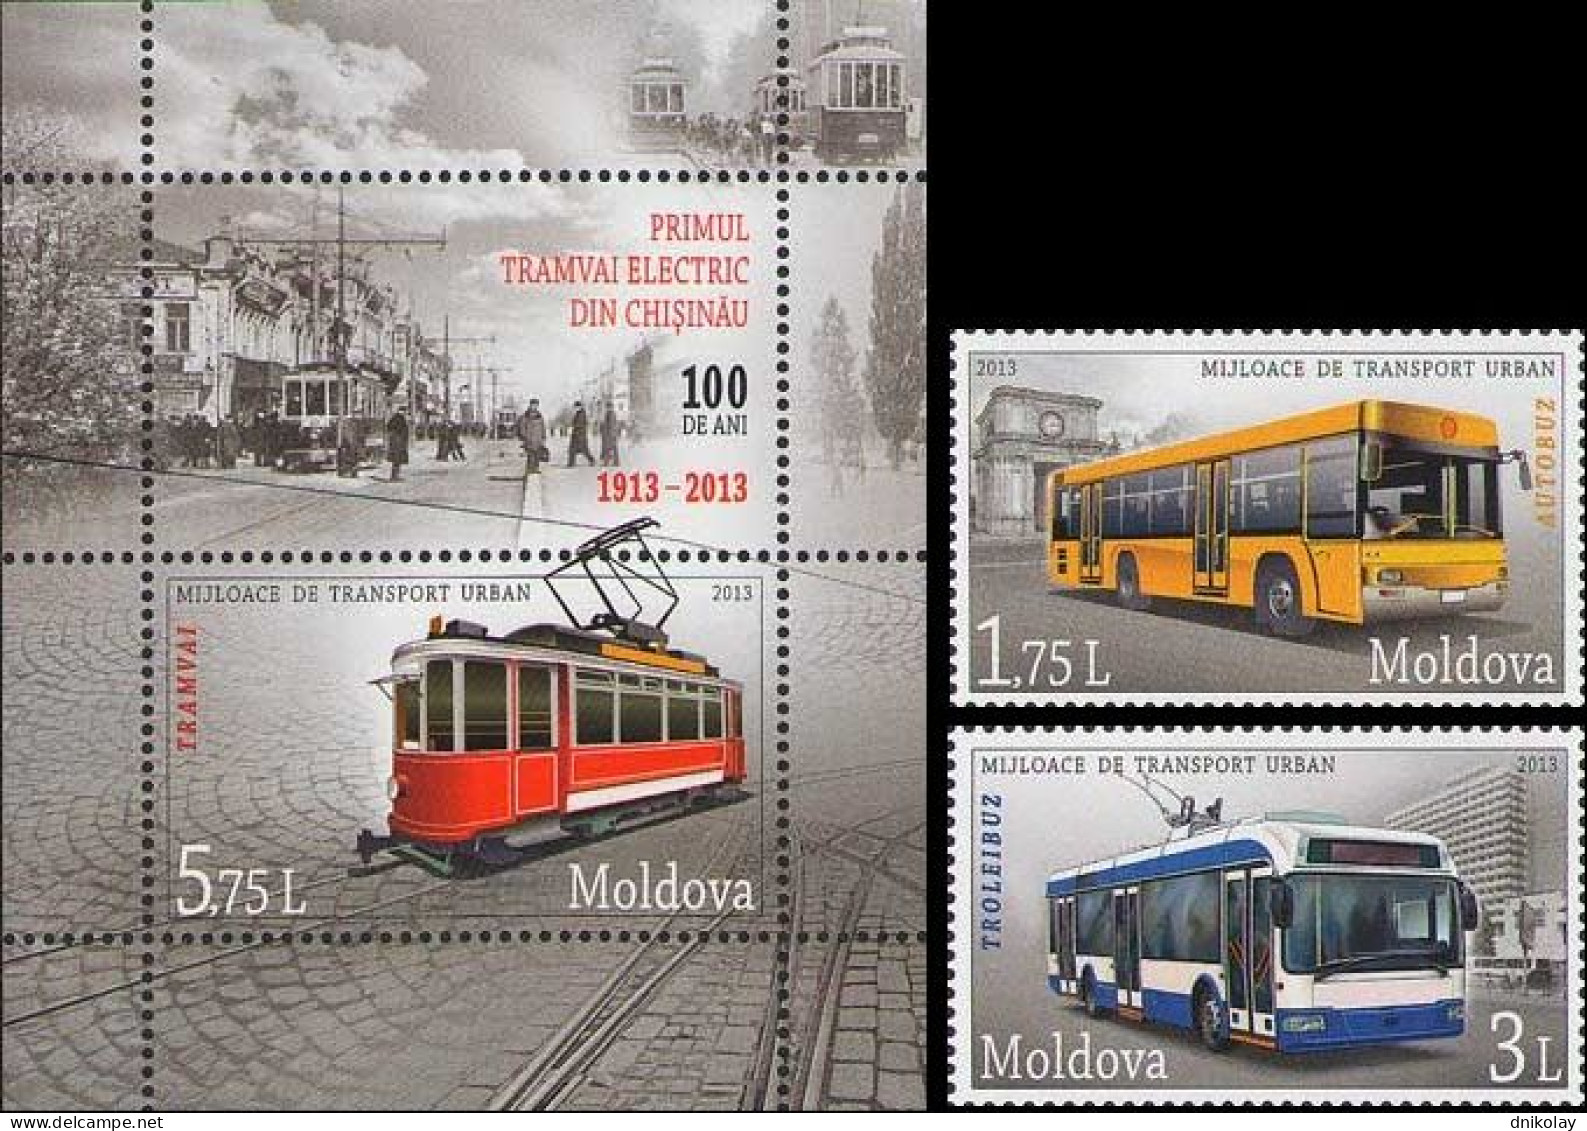 2013 856 Moldova Public Transportation MNH - Moldova